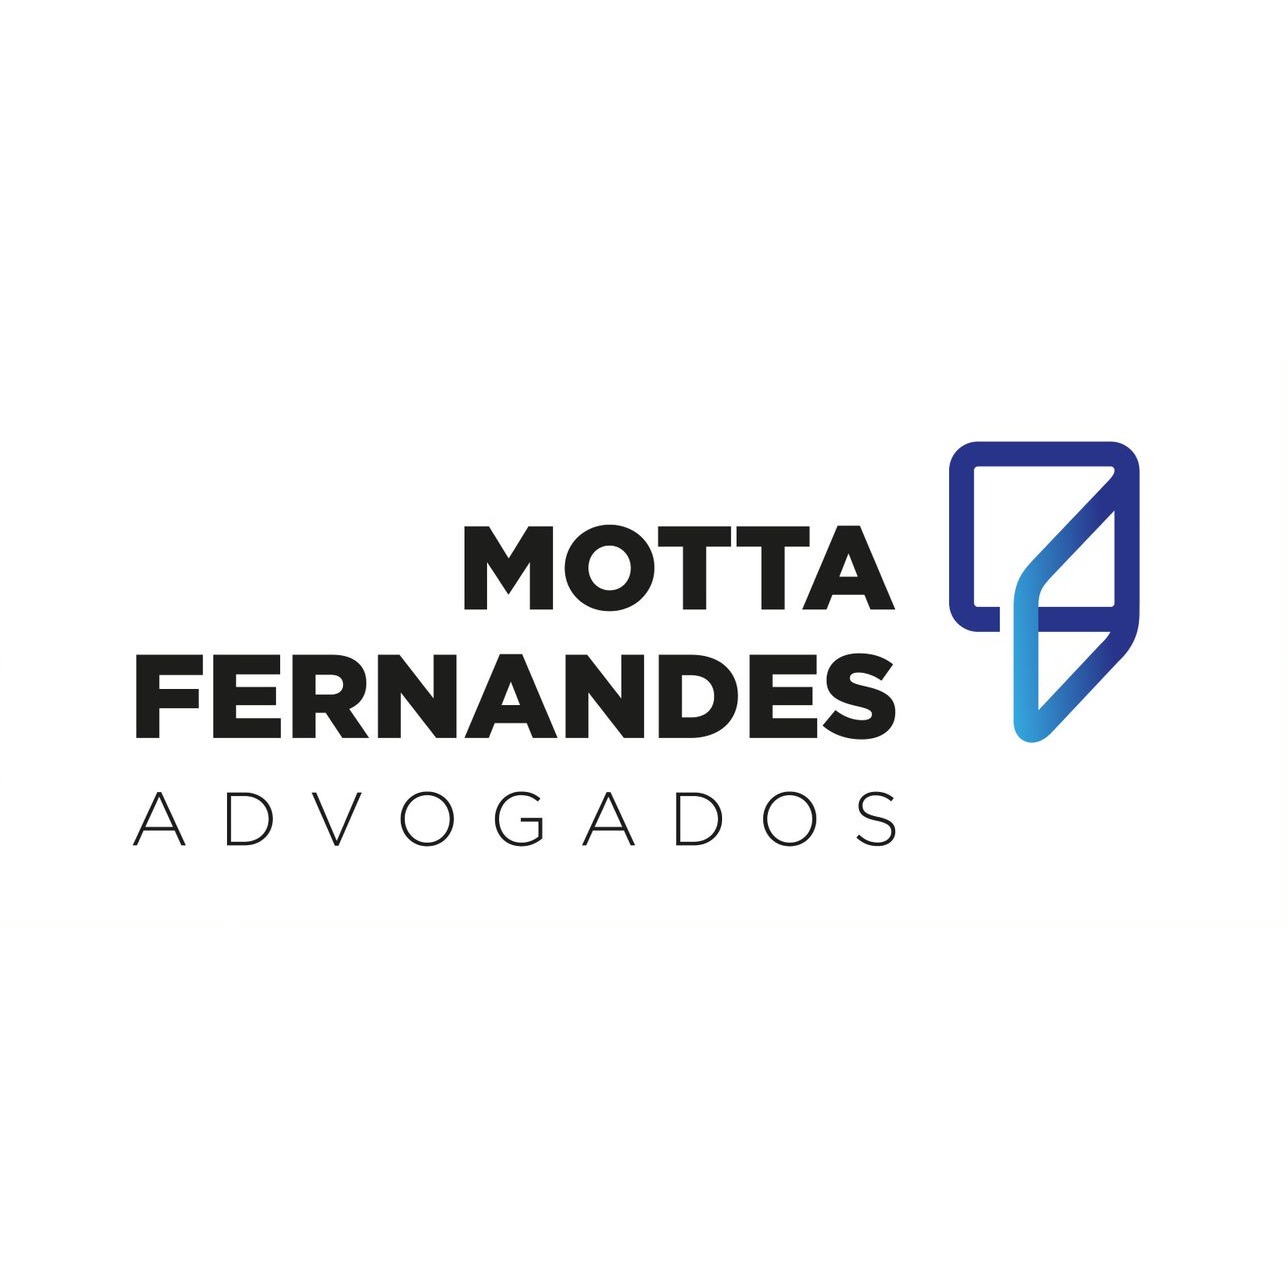 the Motta Fernandes Advogados logo.